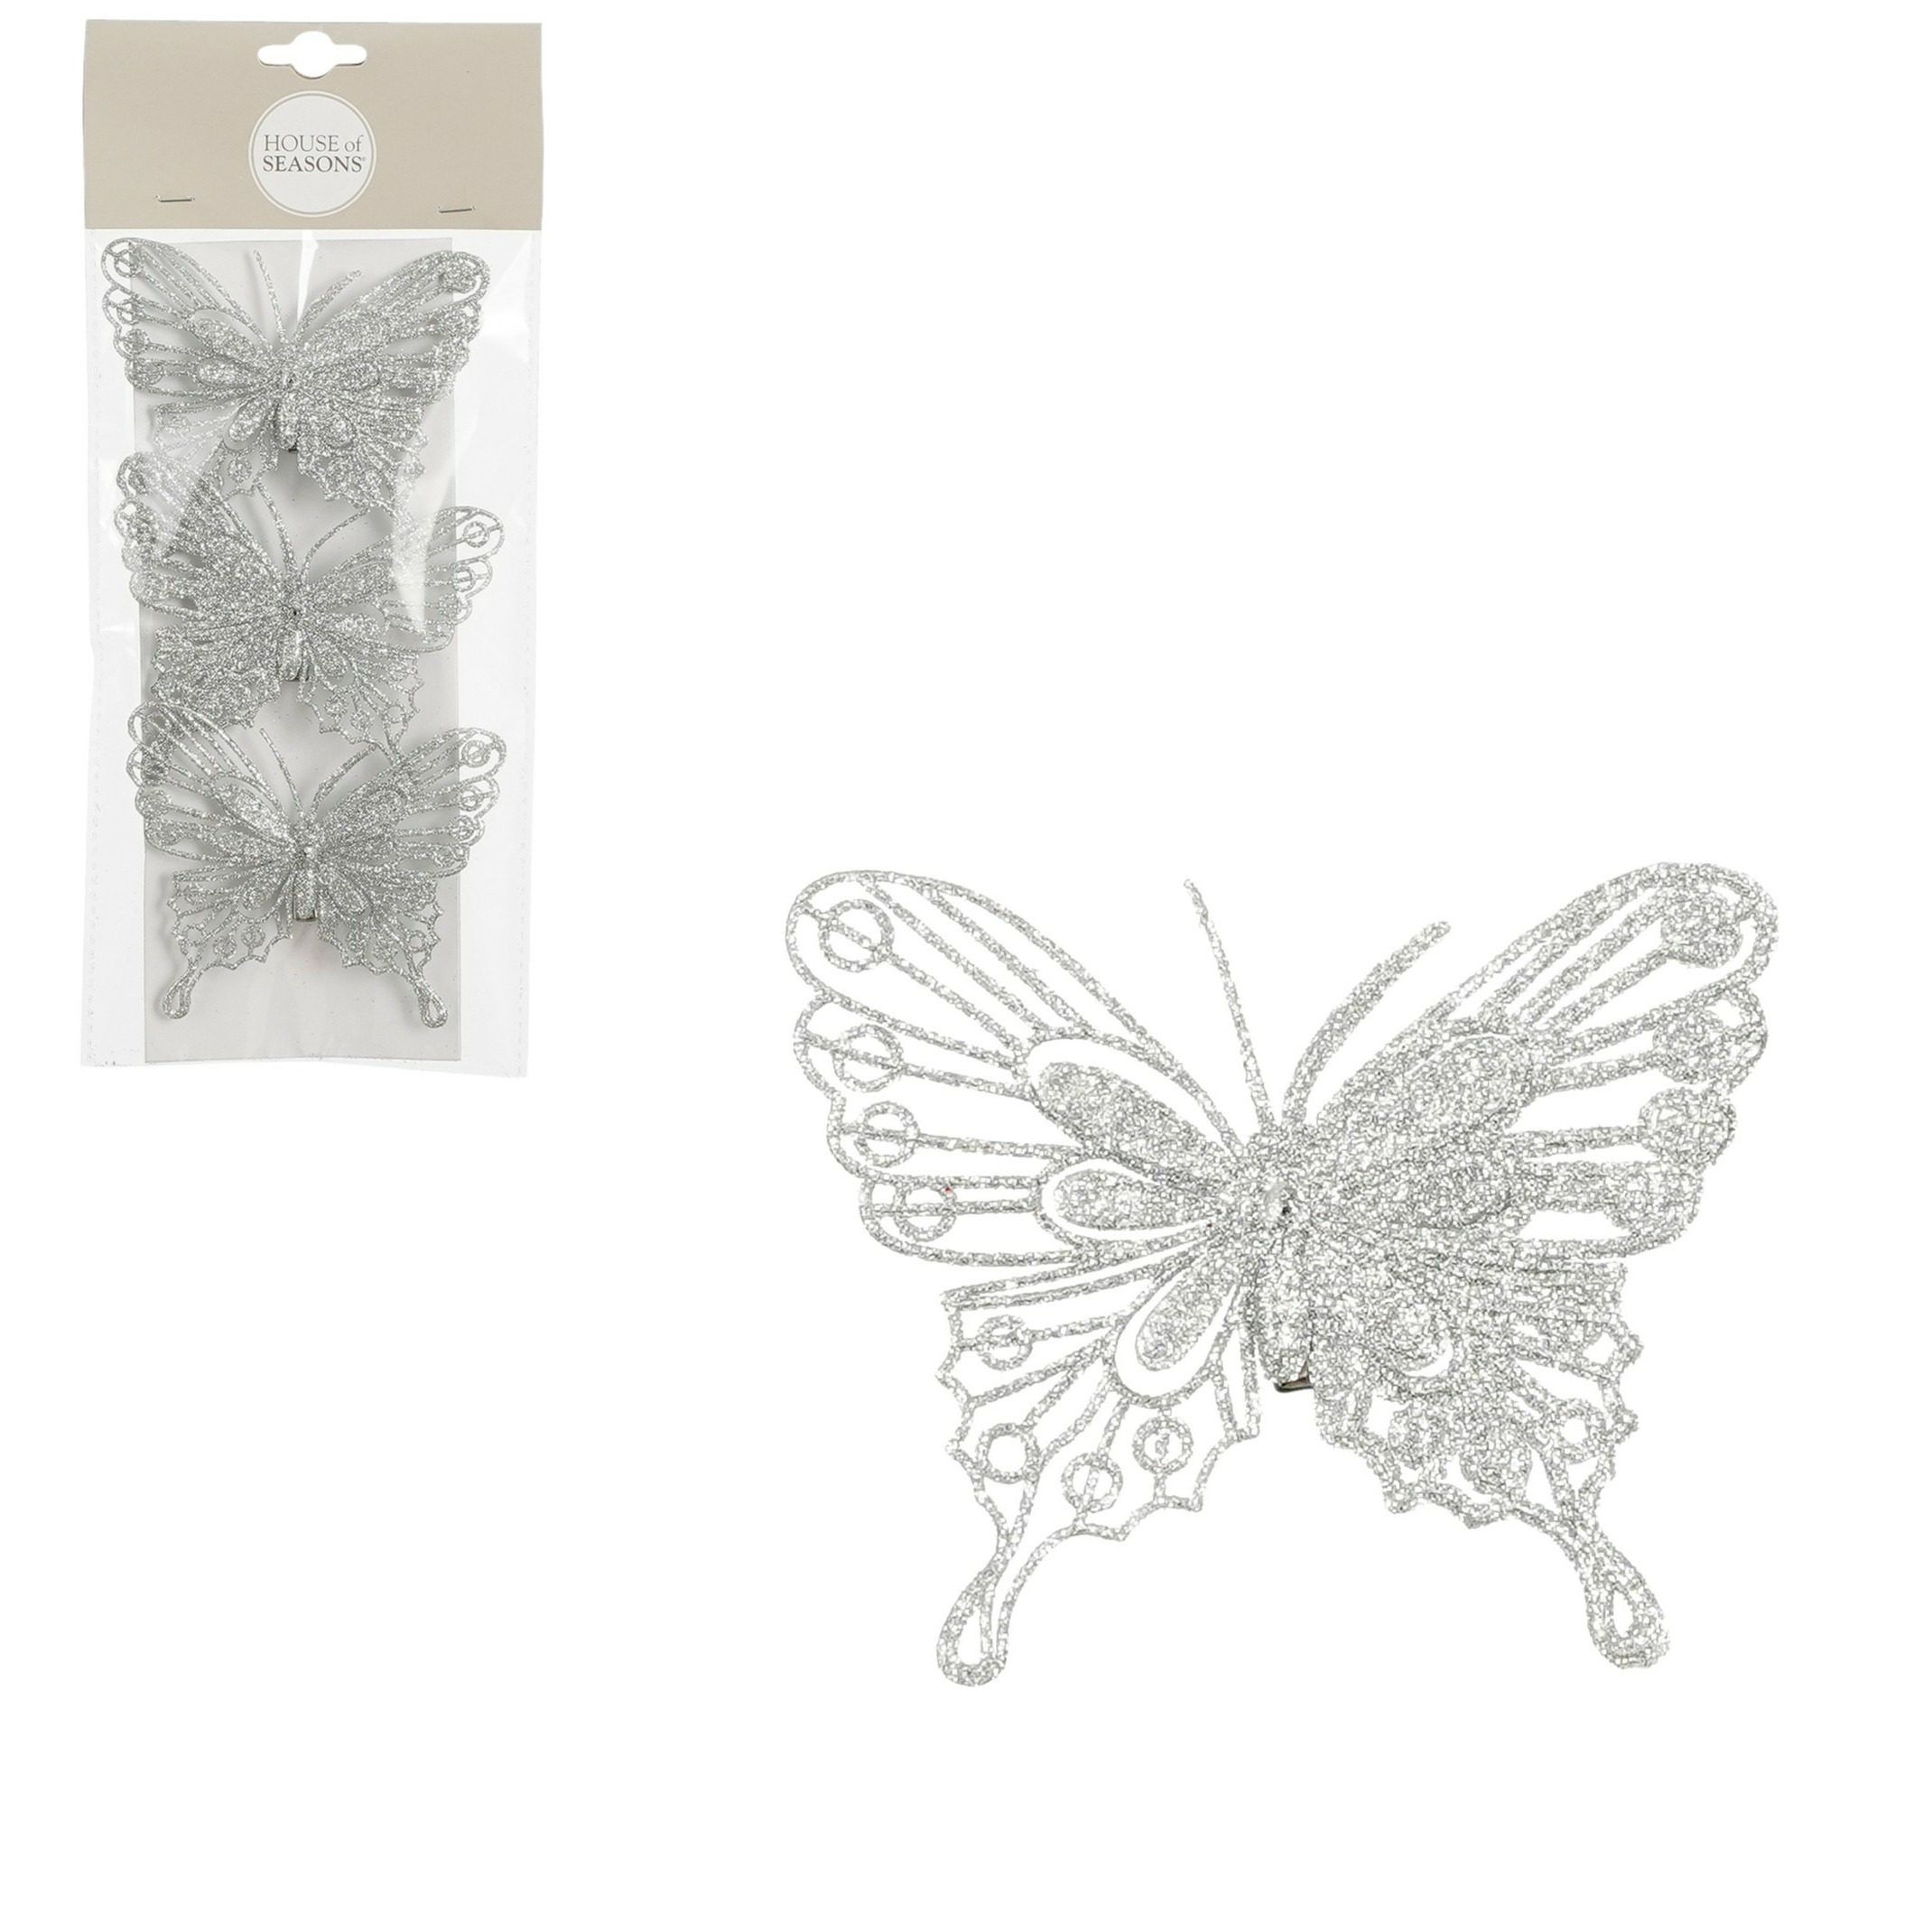 House of Seasons vlinders op clip 3x stuks zilver glitter 10 cm